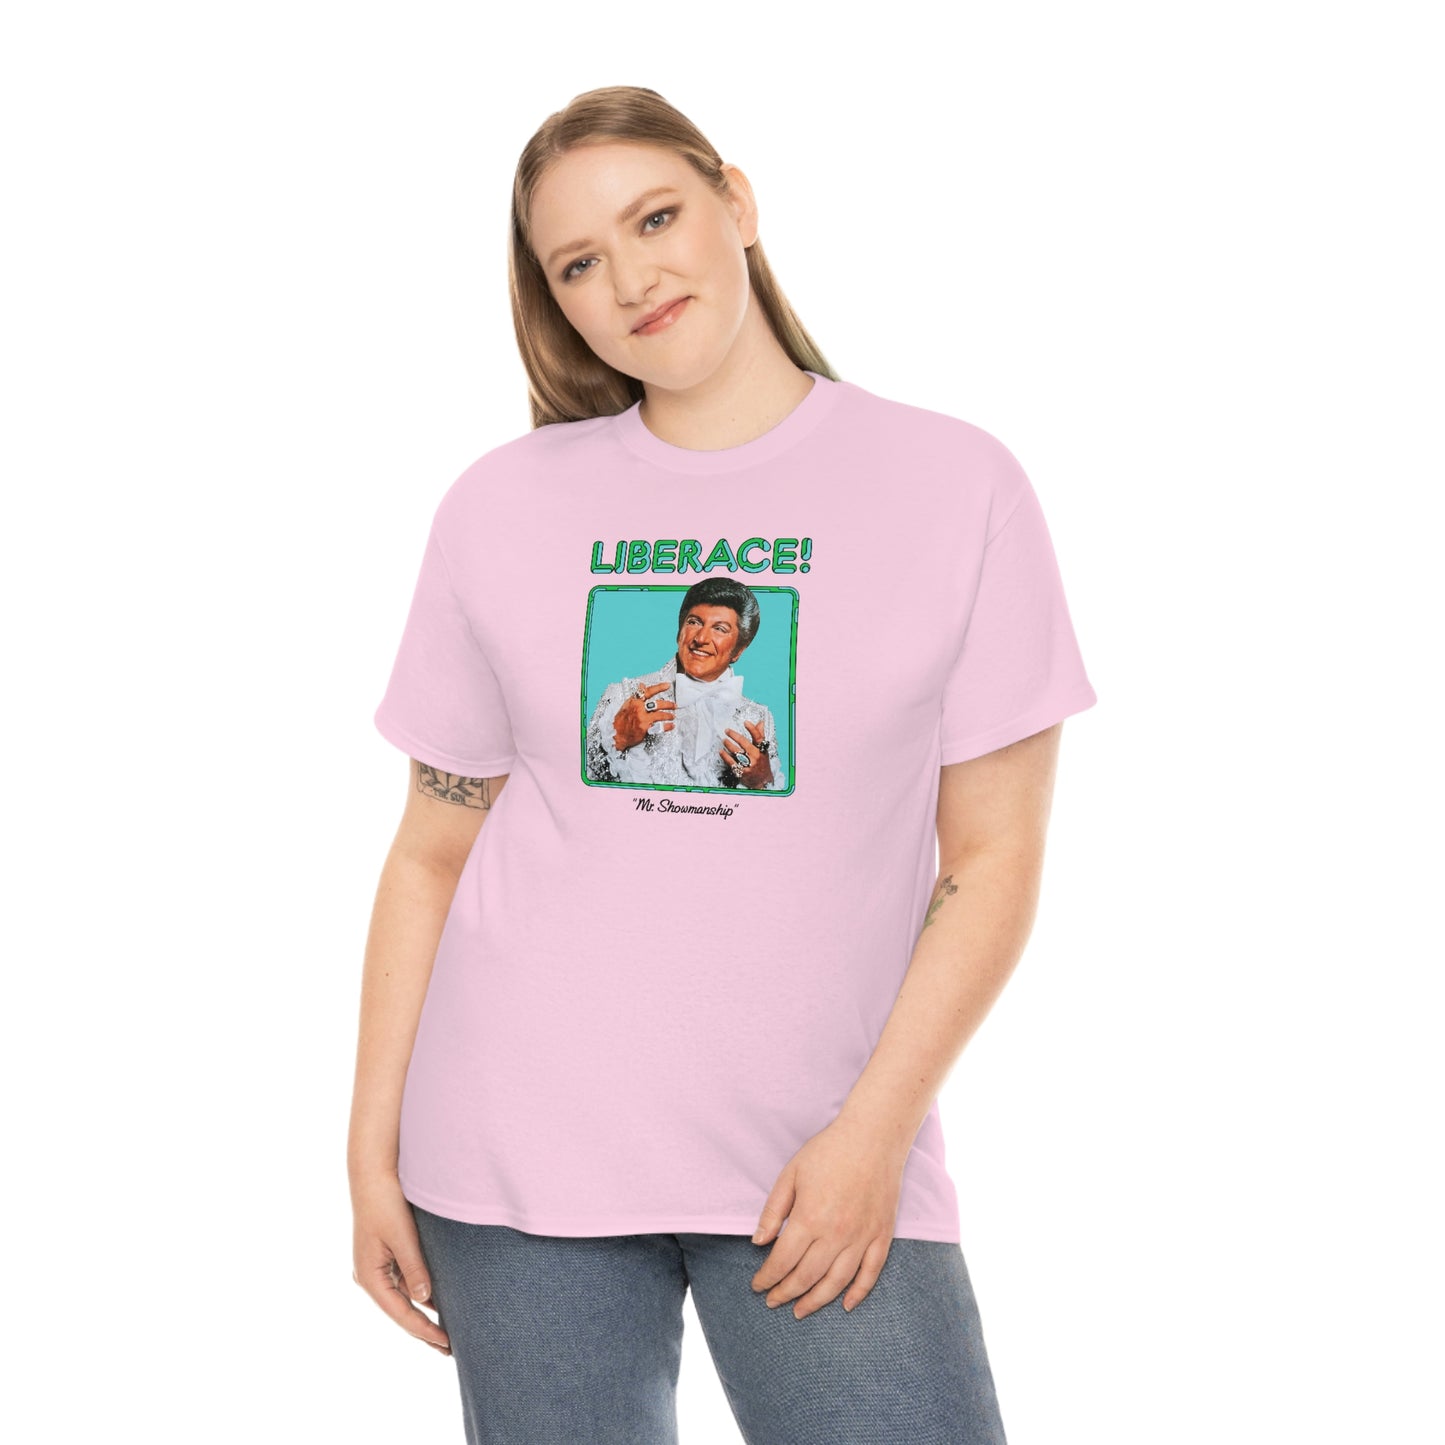 Liberace T-Shirt